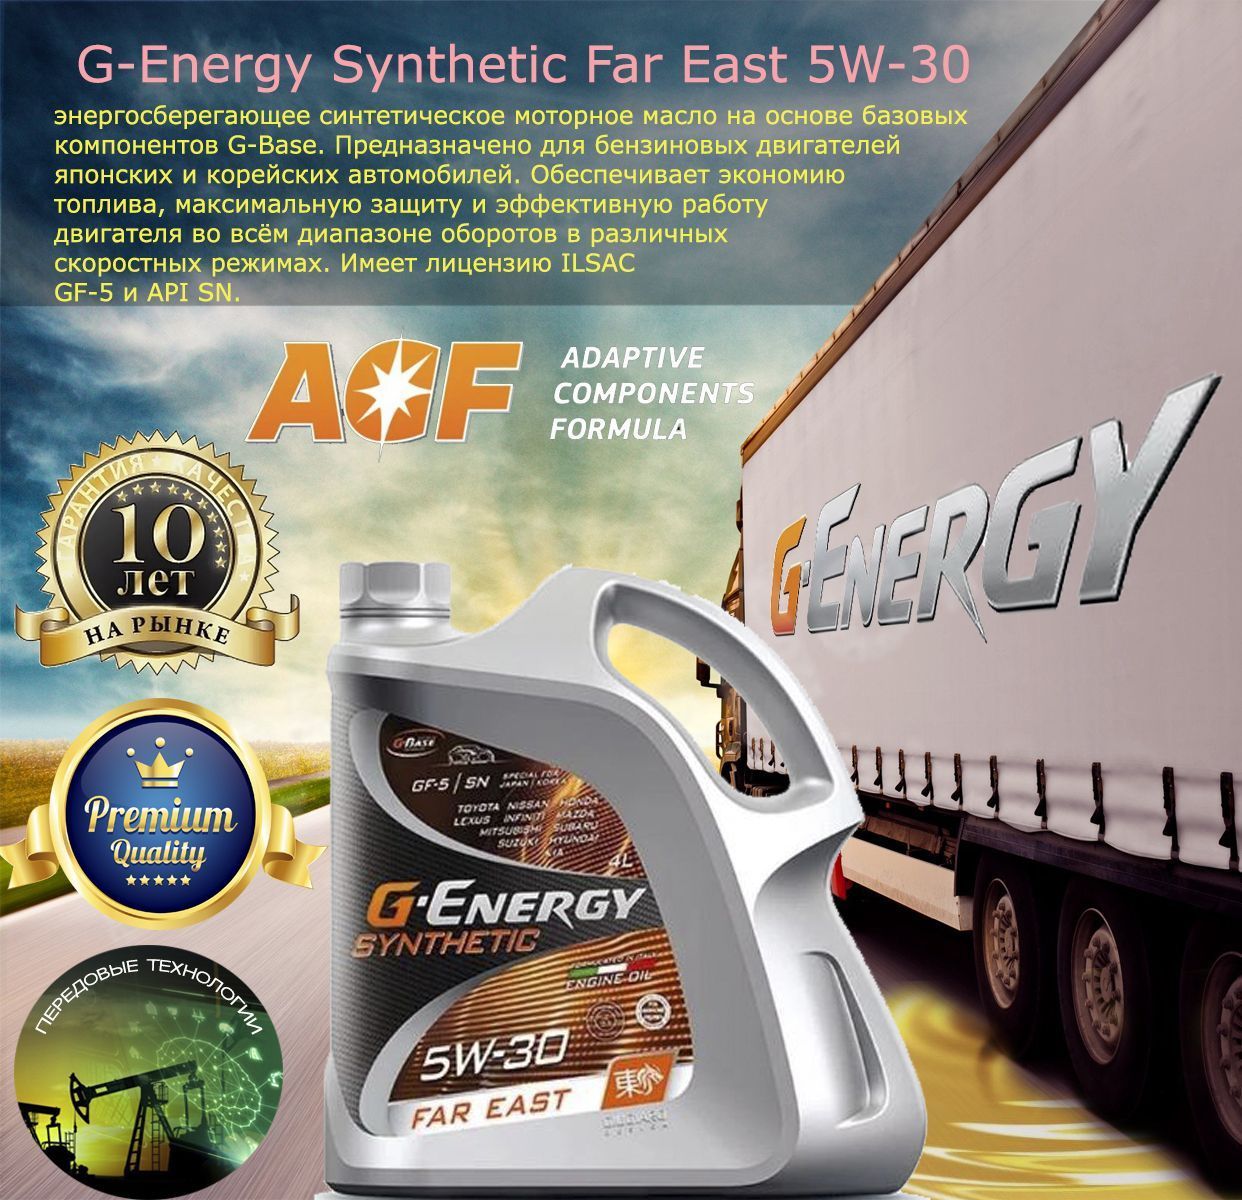 Масло g energy synthetic 5w 30. G-Energy Synthetic far East 5w30 4л 253142415. Масло g Energy 5w30 far East. G-Energy Synthetic far East 5w-30. Моторное масло g-Energy Synthetic far East 5w-30 4 л.